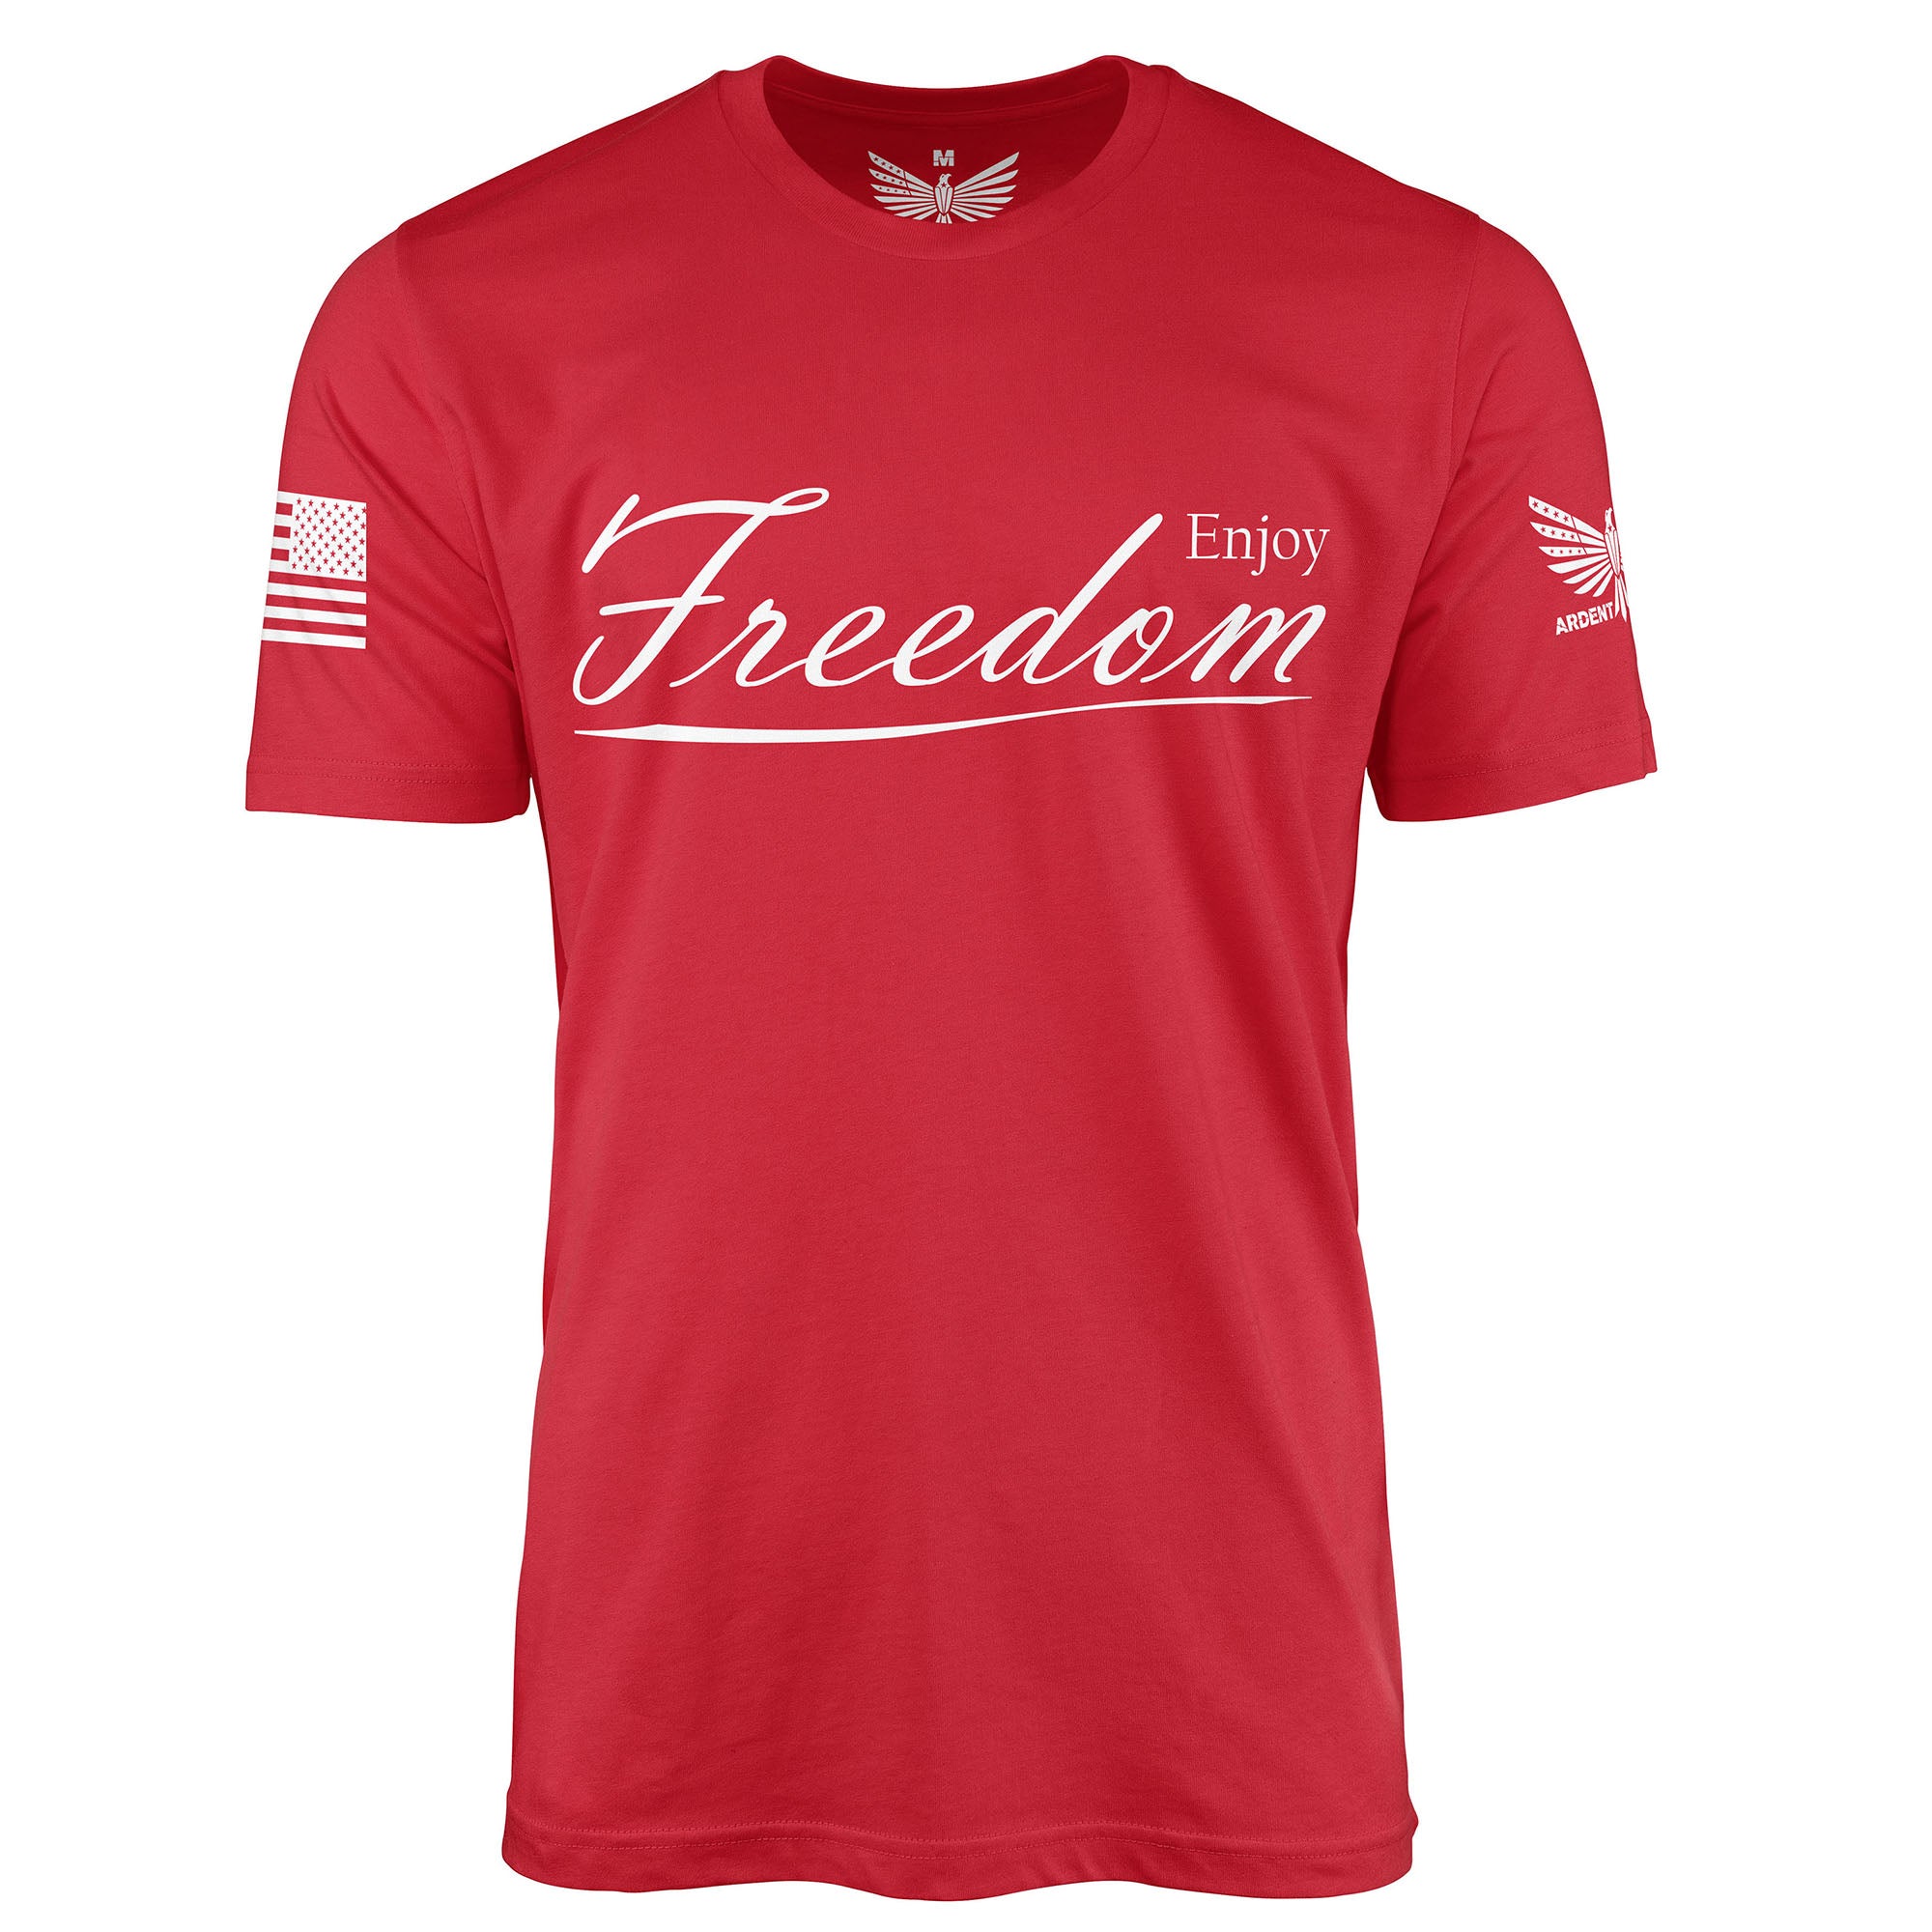 Enjoy Freedom-Men's Shirt-S-Ardent Patriot Apparel Co.